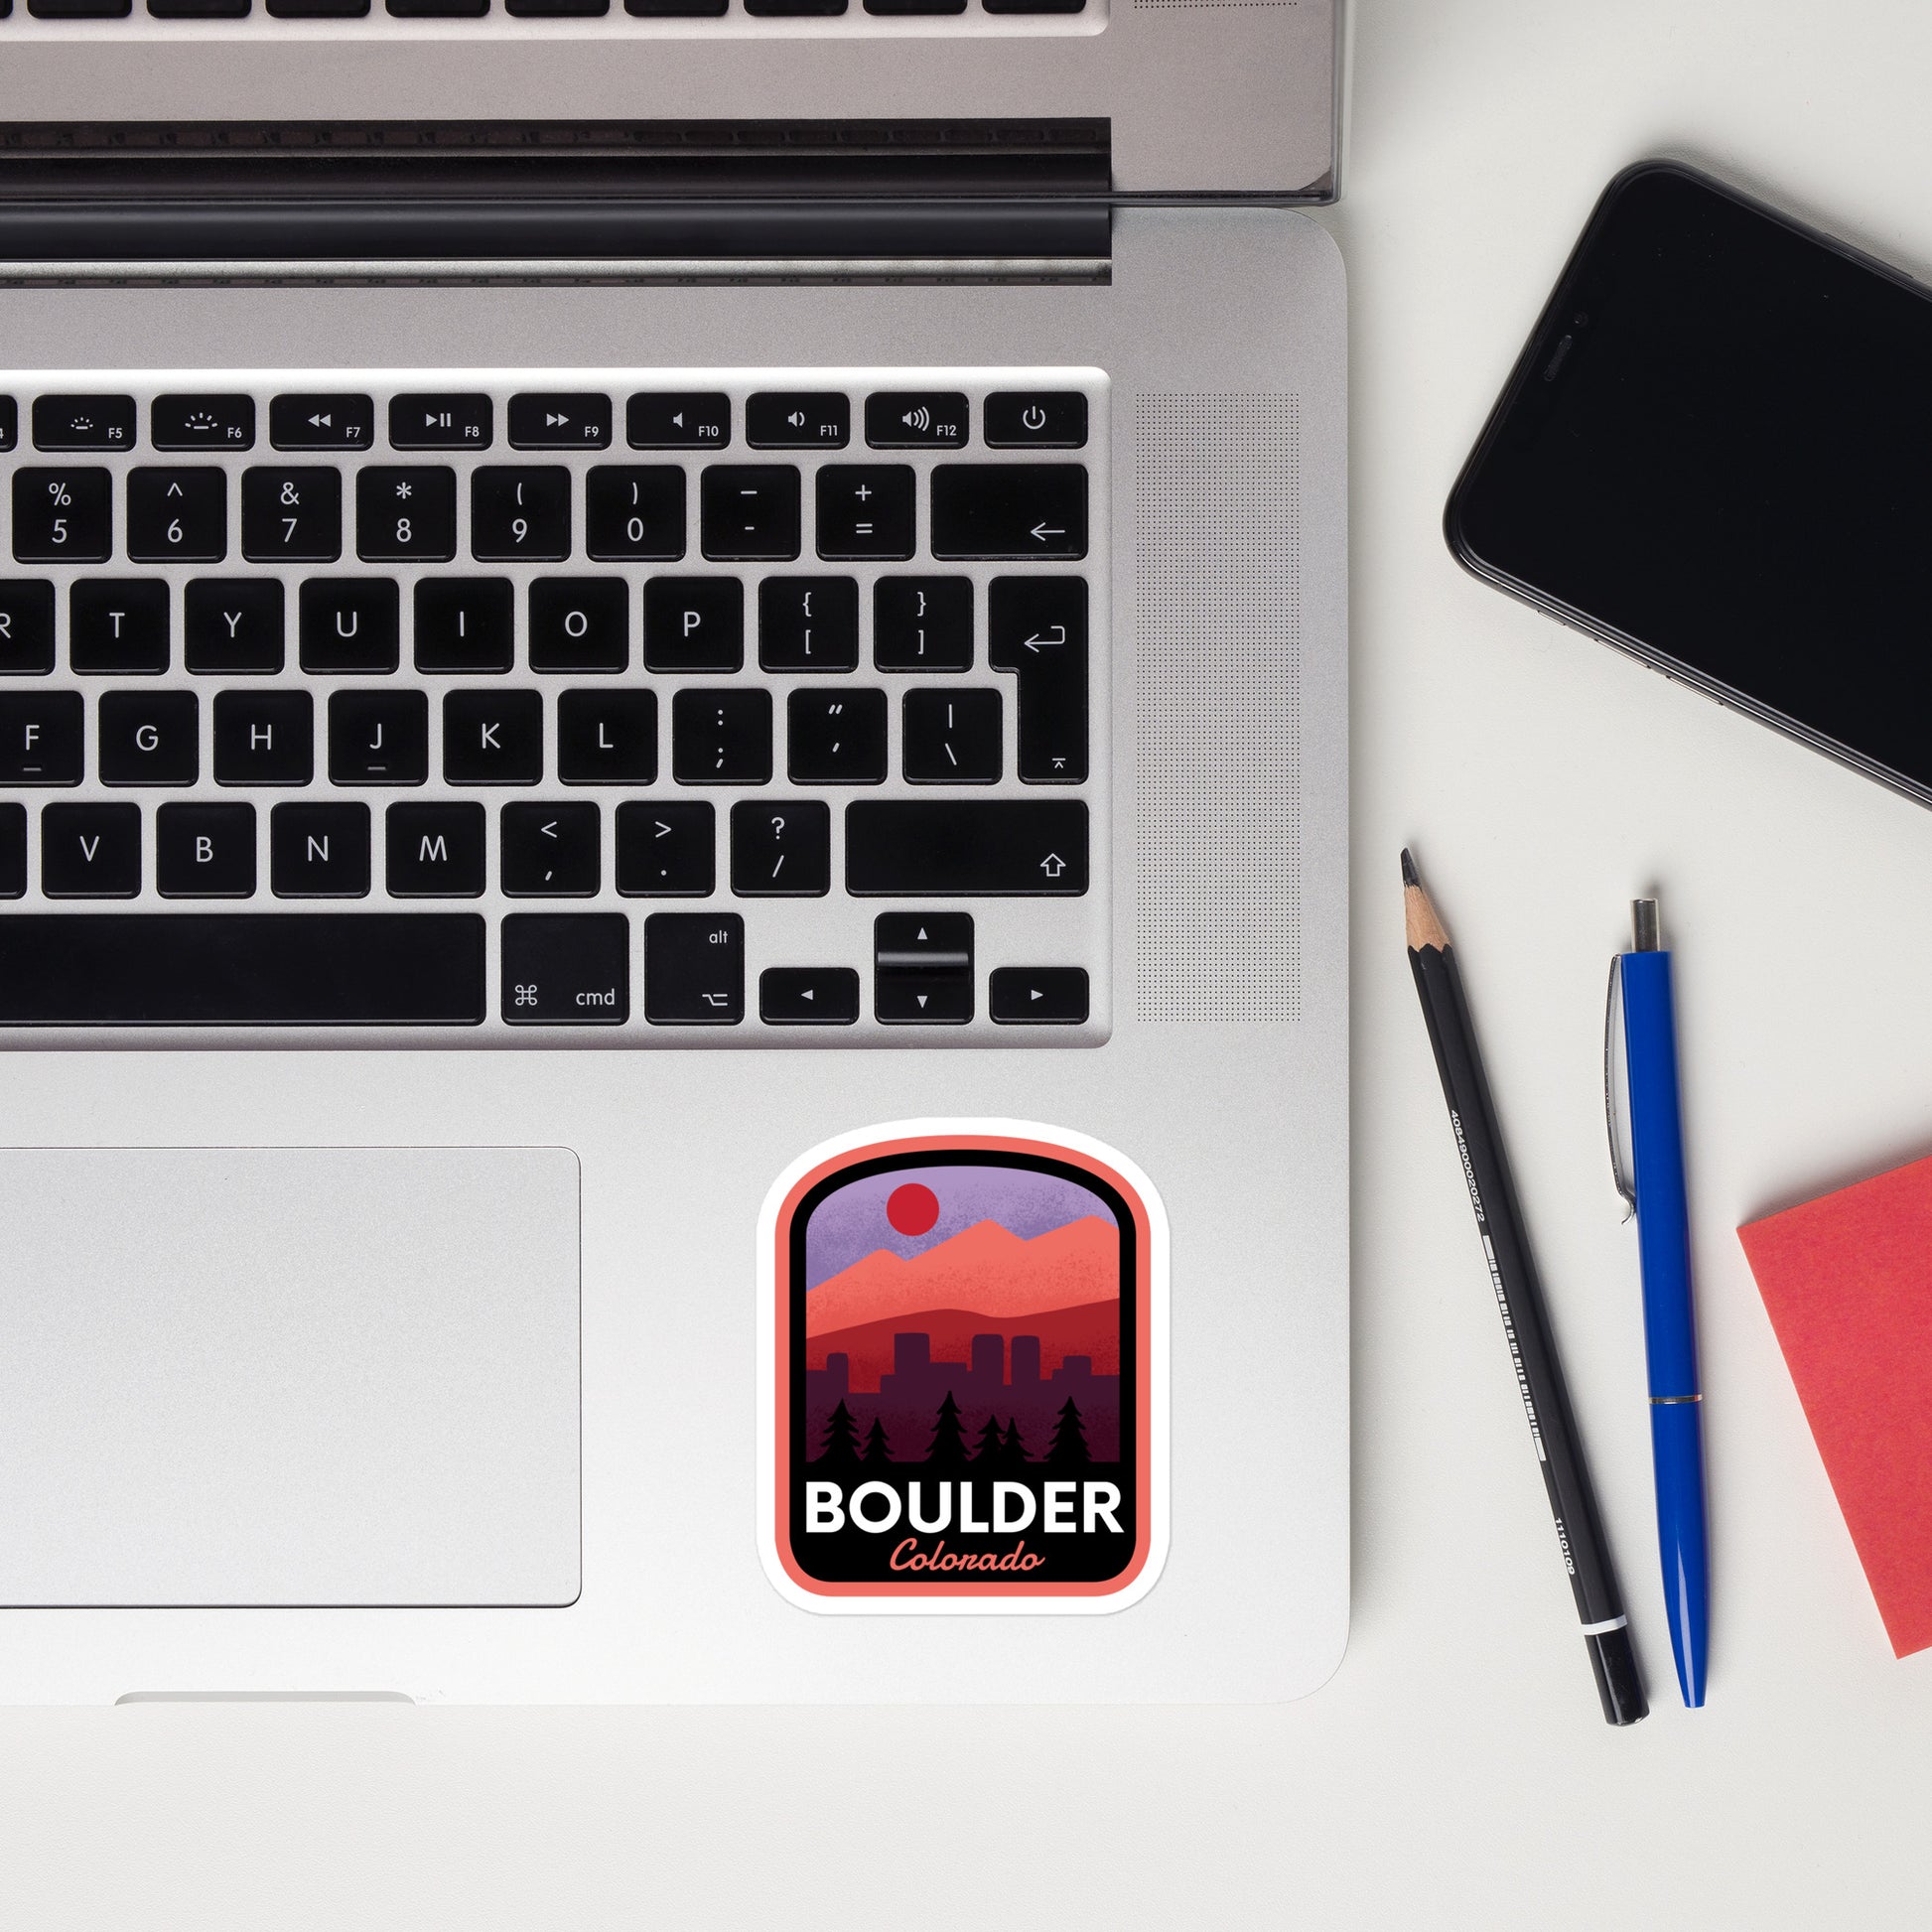 A sticker of Boulder Colorado on a laptop